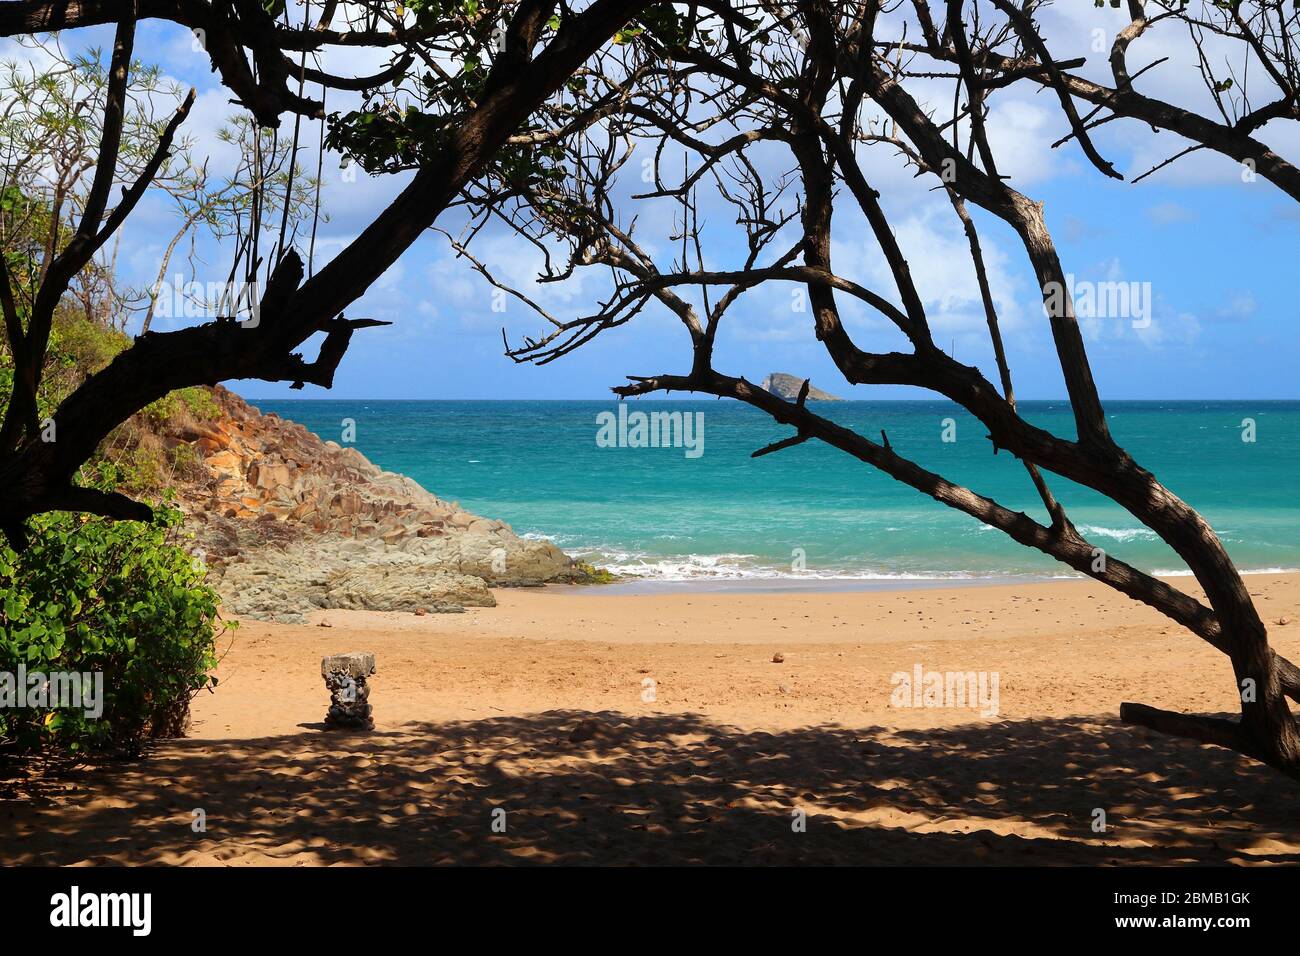 Guadeloupe sandy beach of Basse-Terre island. Caribbean vacation landscape. Tillet Beach (Plage de Tillet). Stock Photo